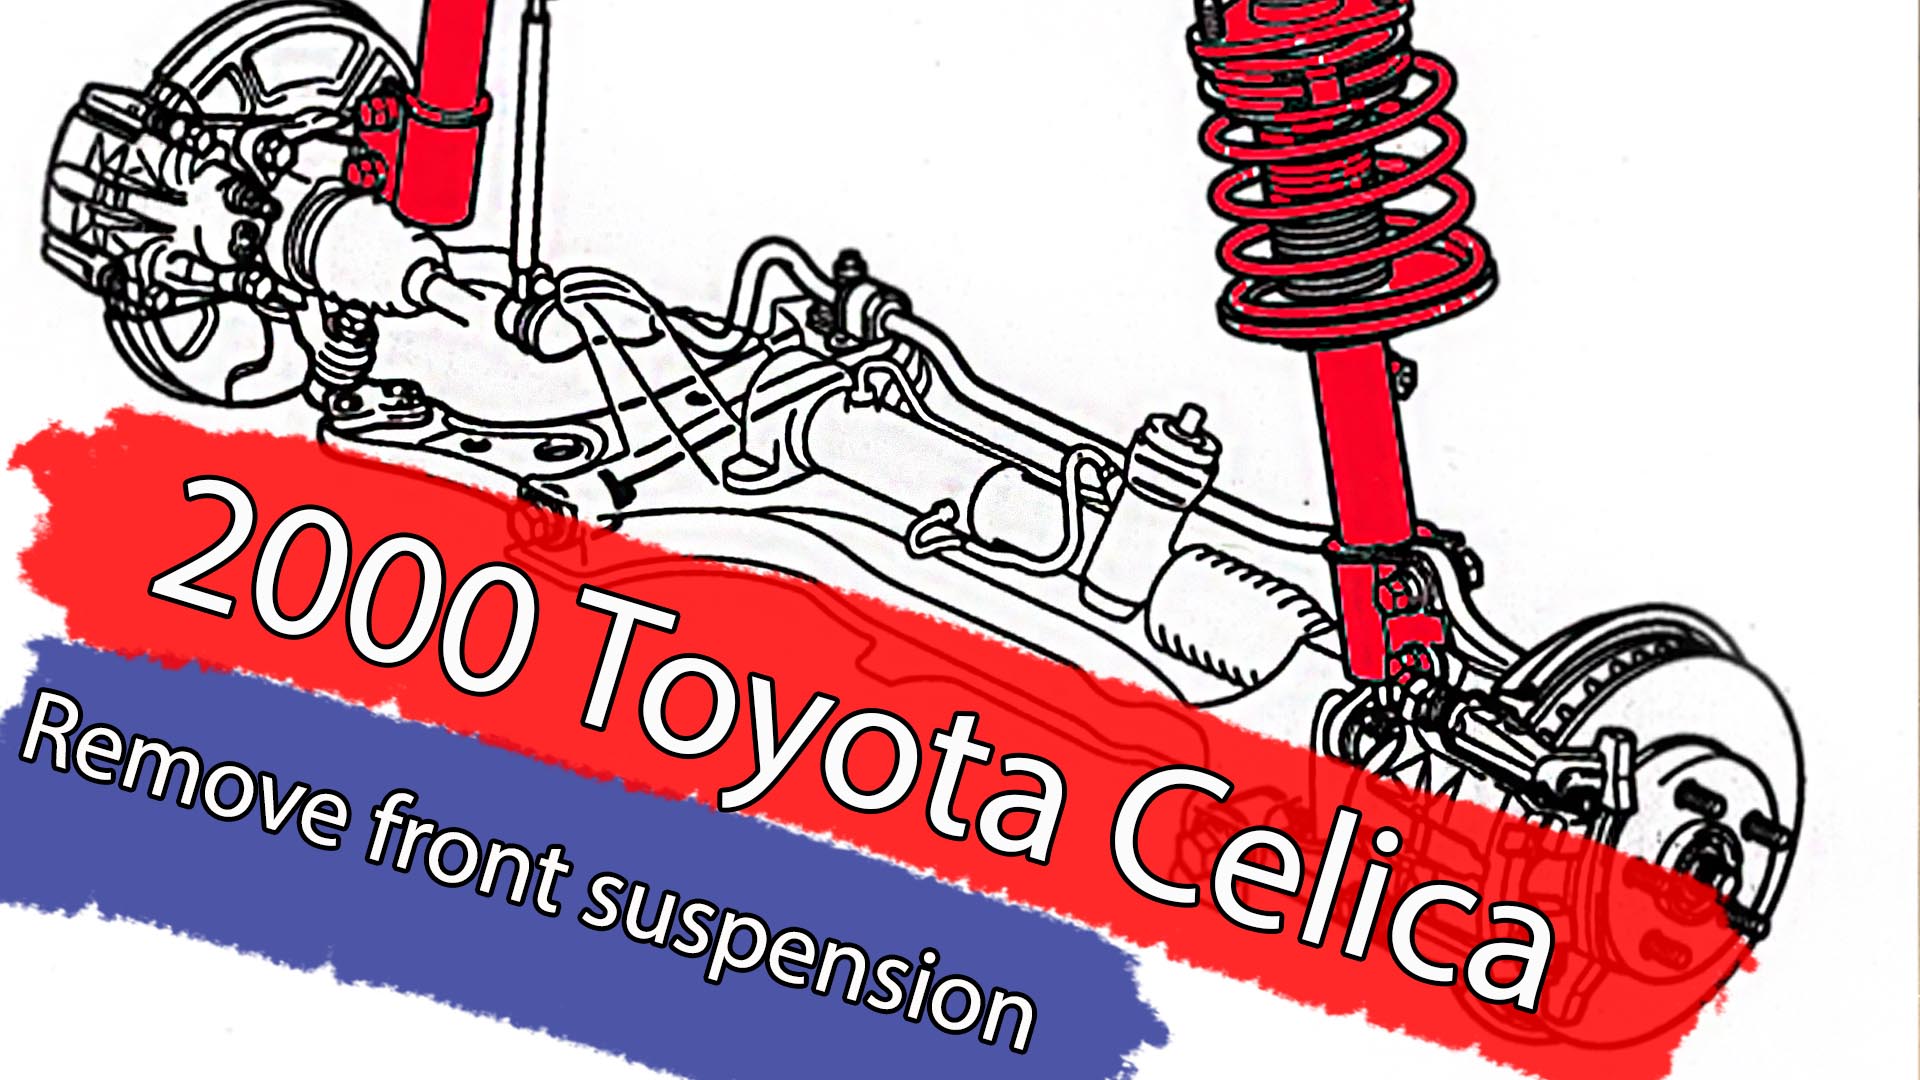 2000 Toyota Celica 1.8 GT